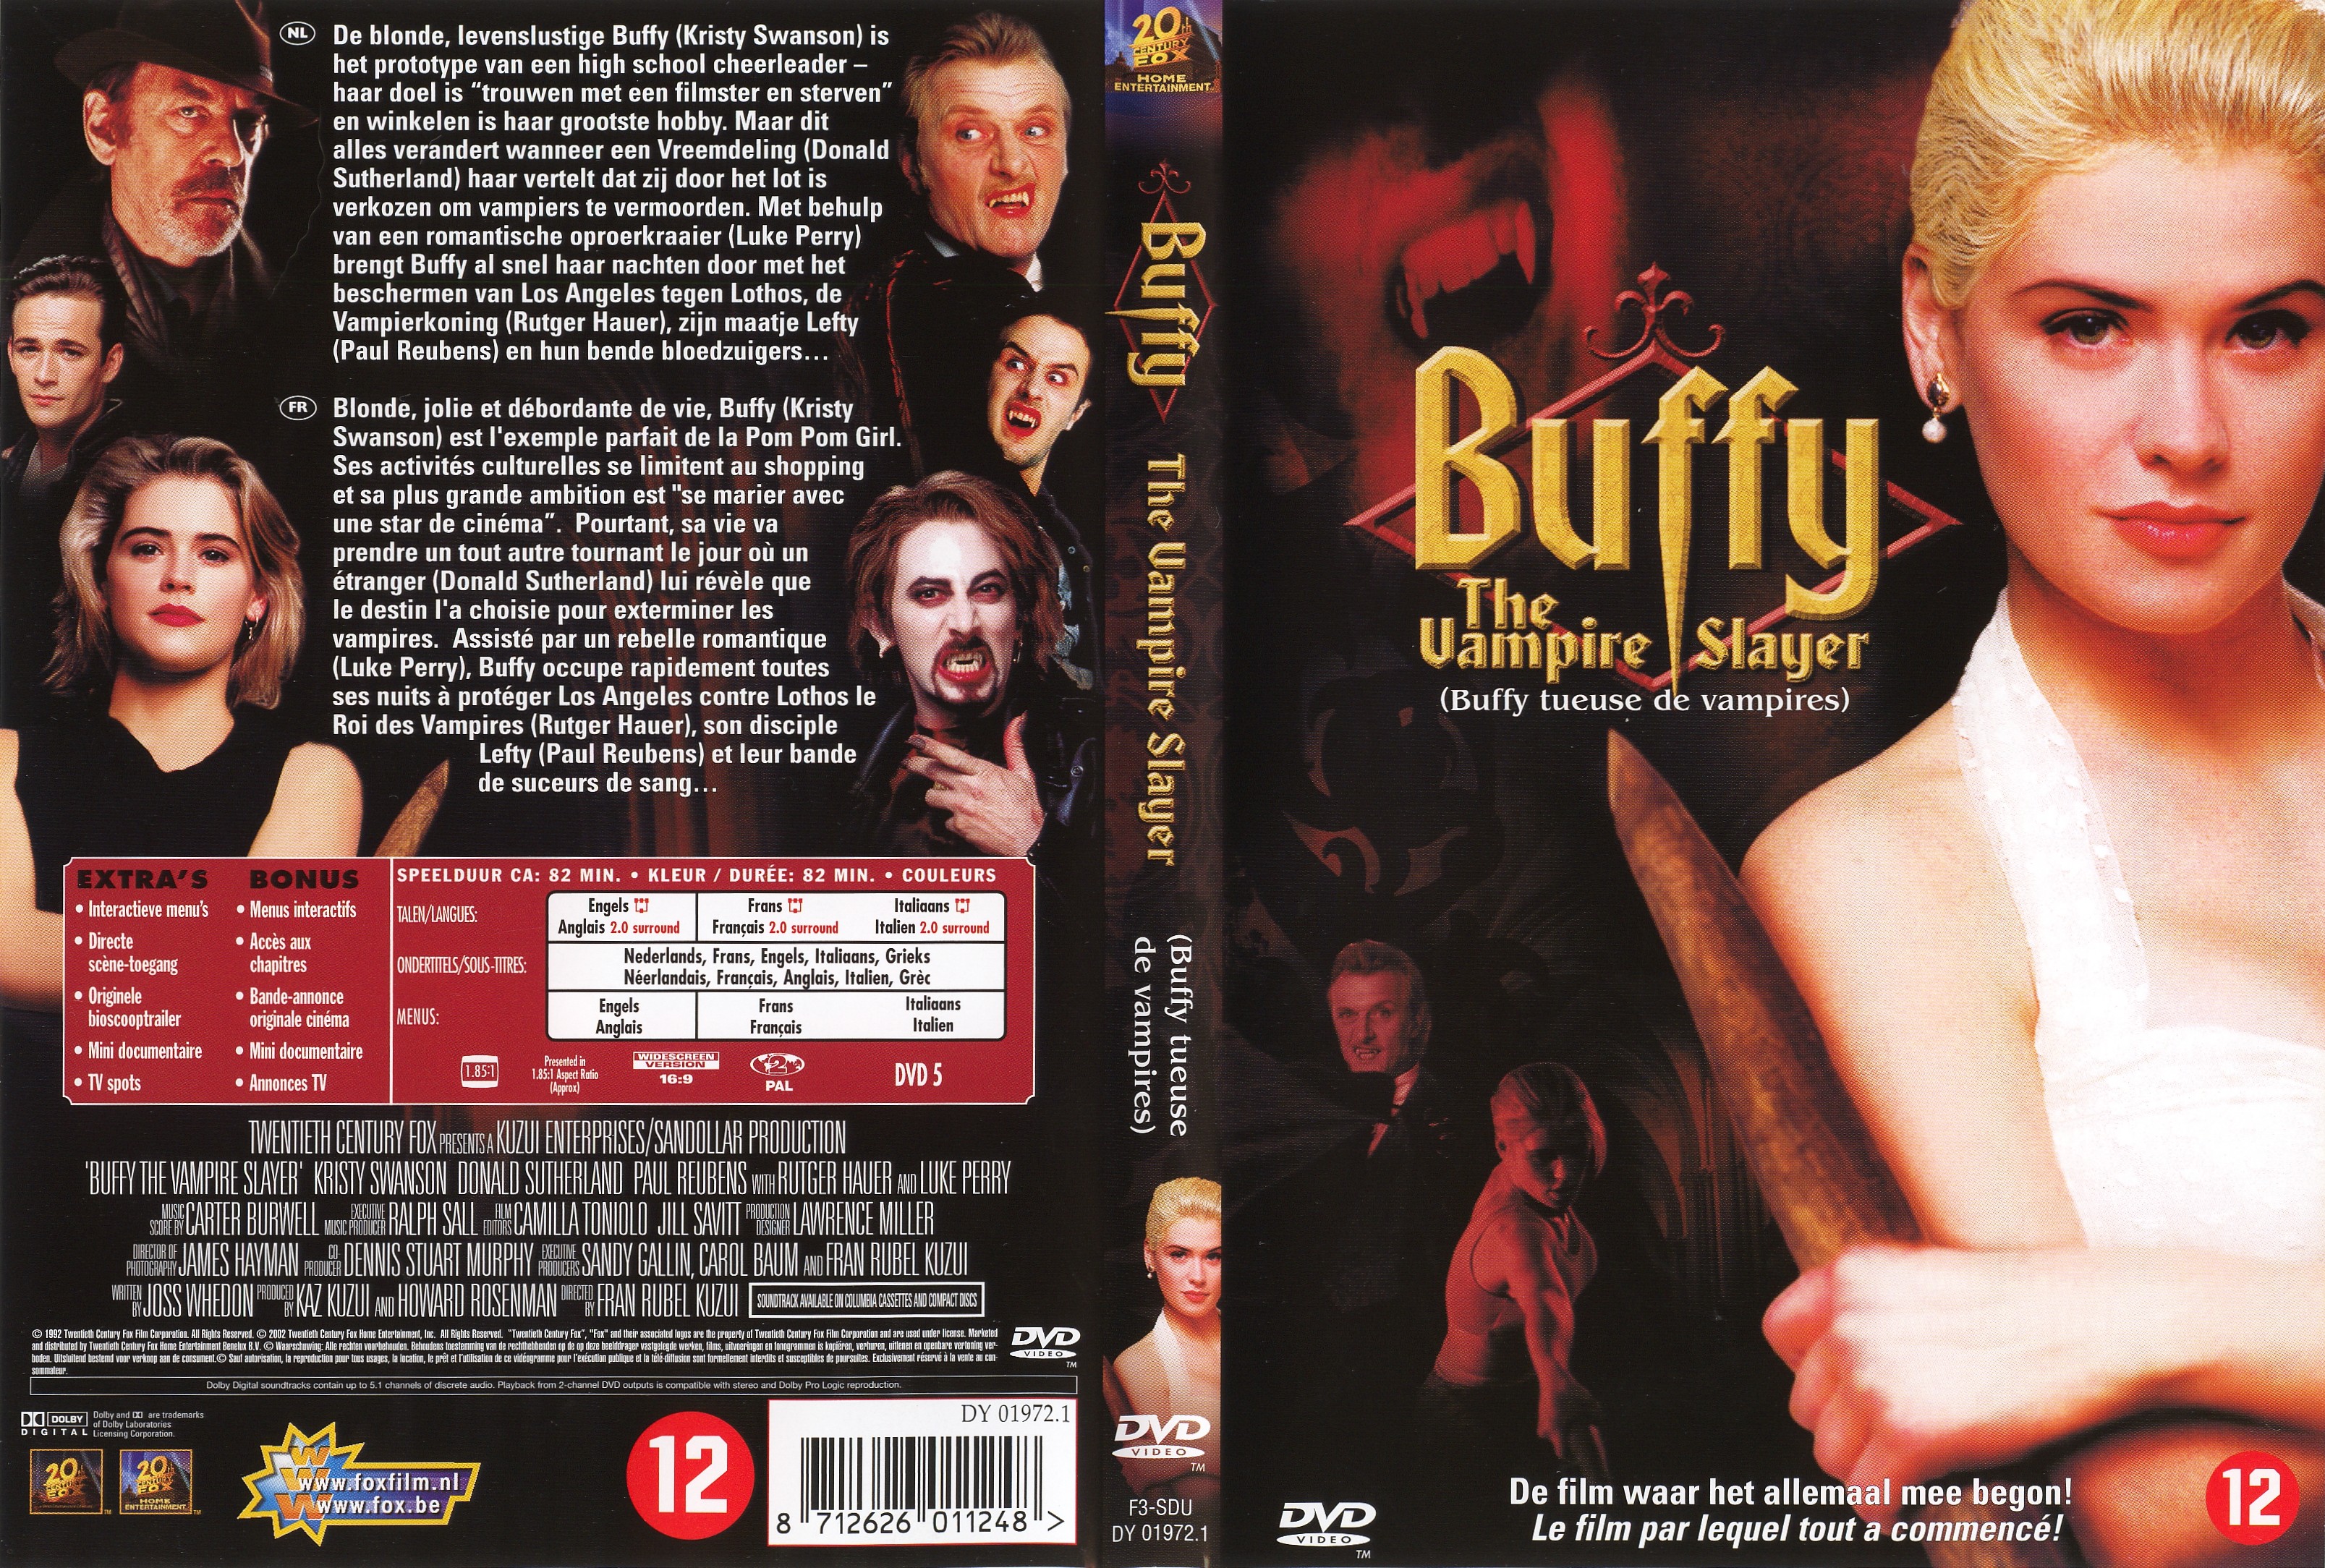 Jaquette DVD Buffy tueuse de vampires